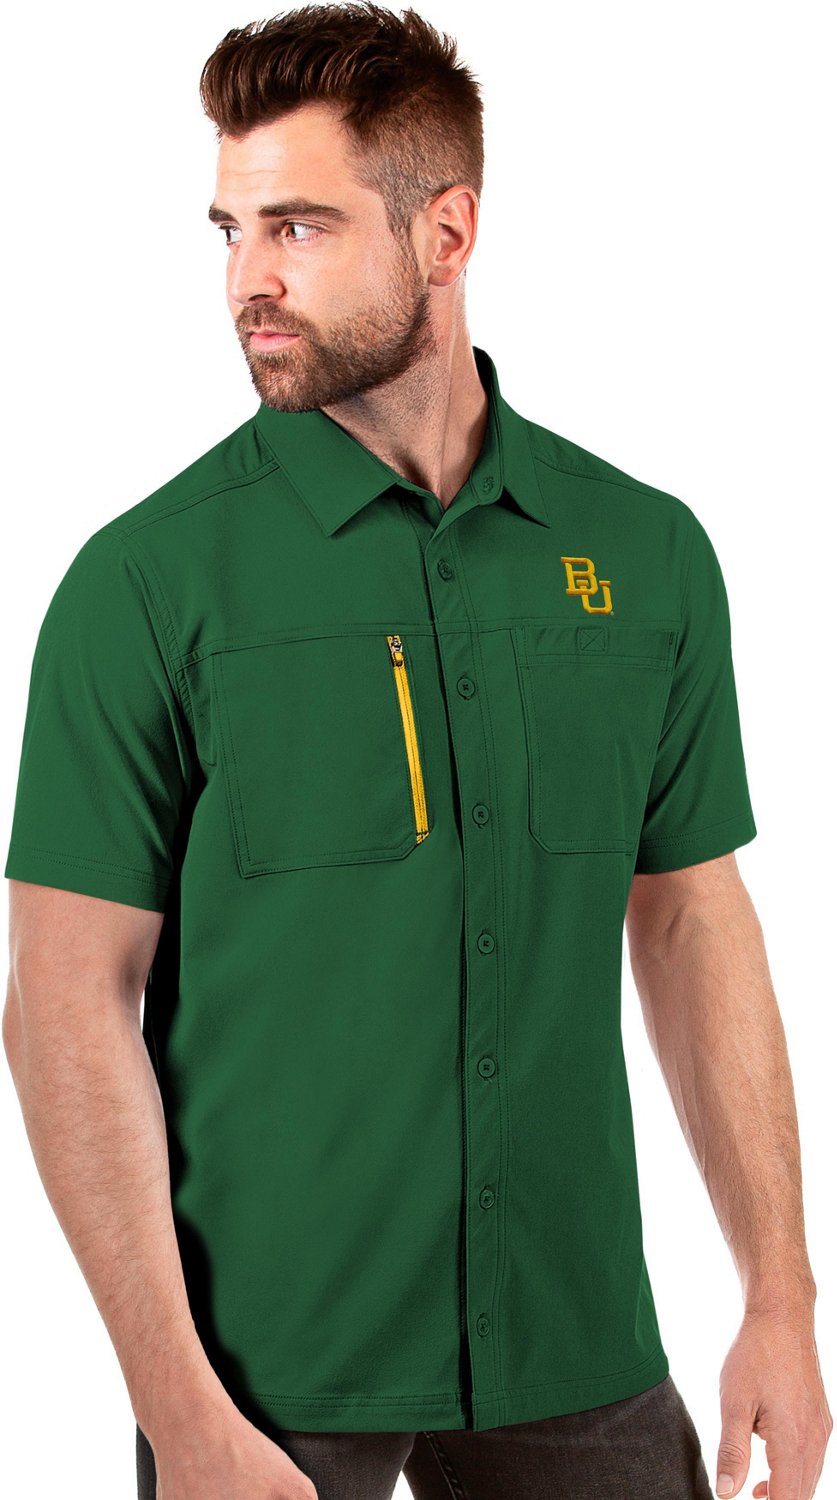 Antigua Men's Baylor University Kickoff Limited Edition Woven Fishing Shirt